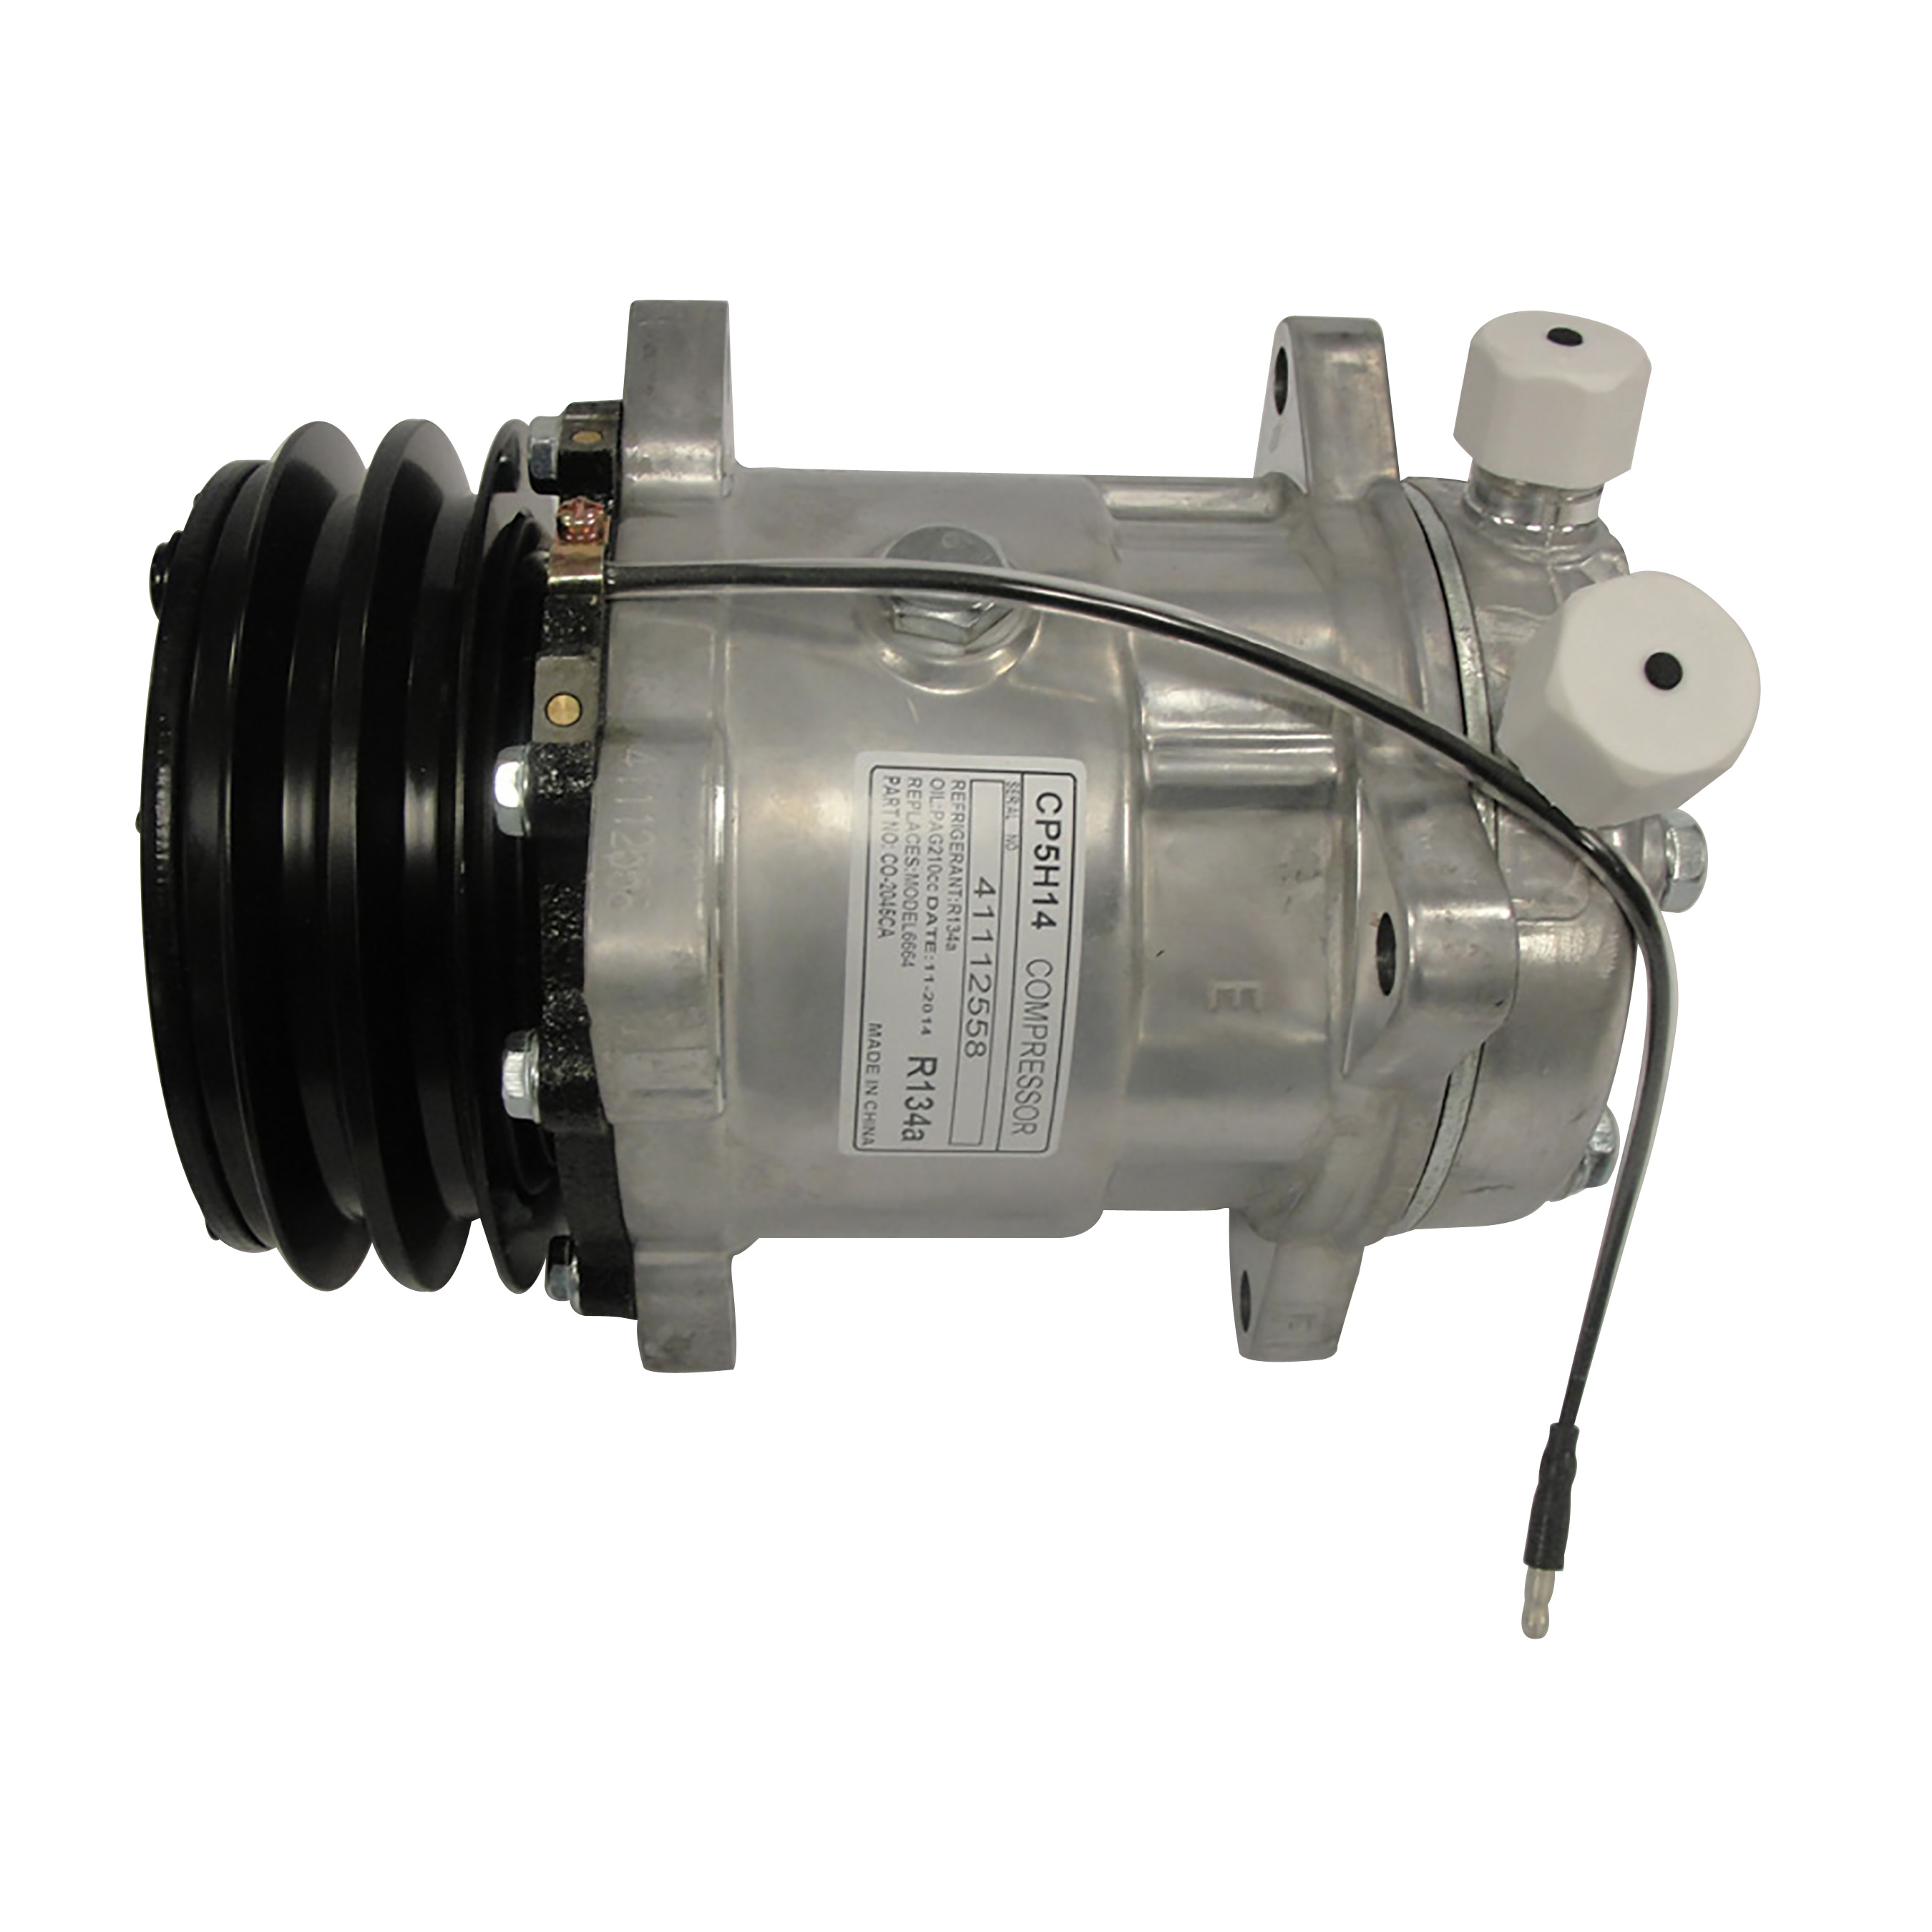 Massey-Ferguson AC Compressor Diameter: 5 1/4( 132mm) Voltage: 12